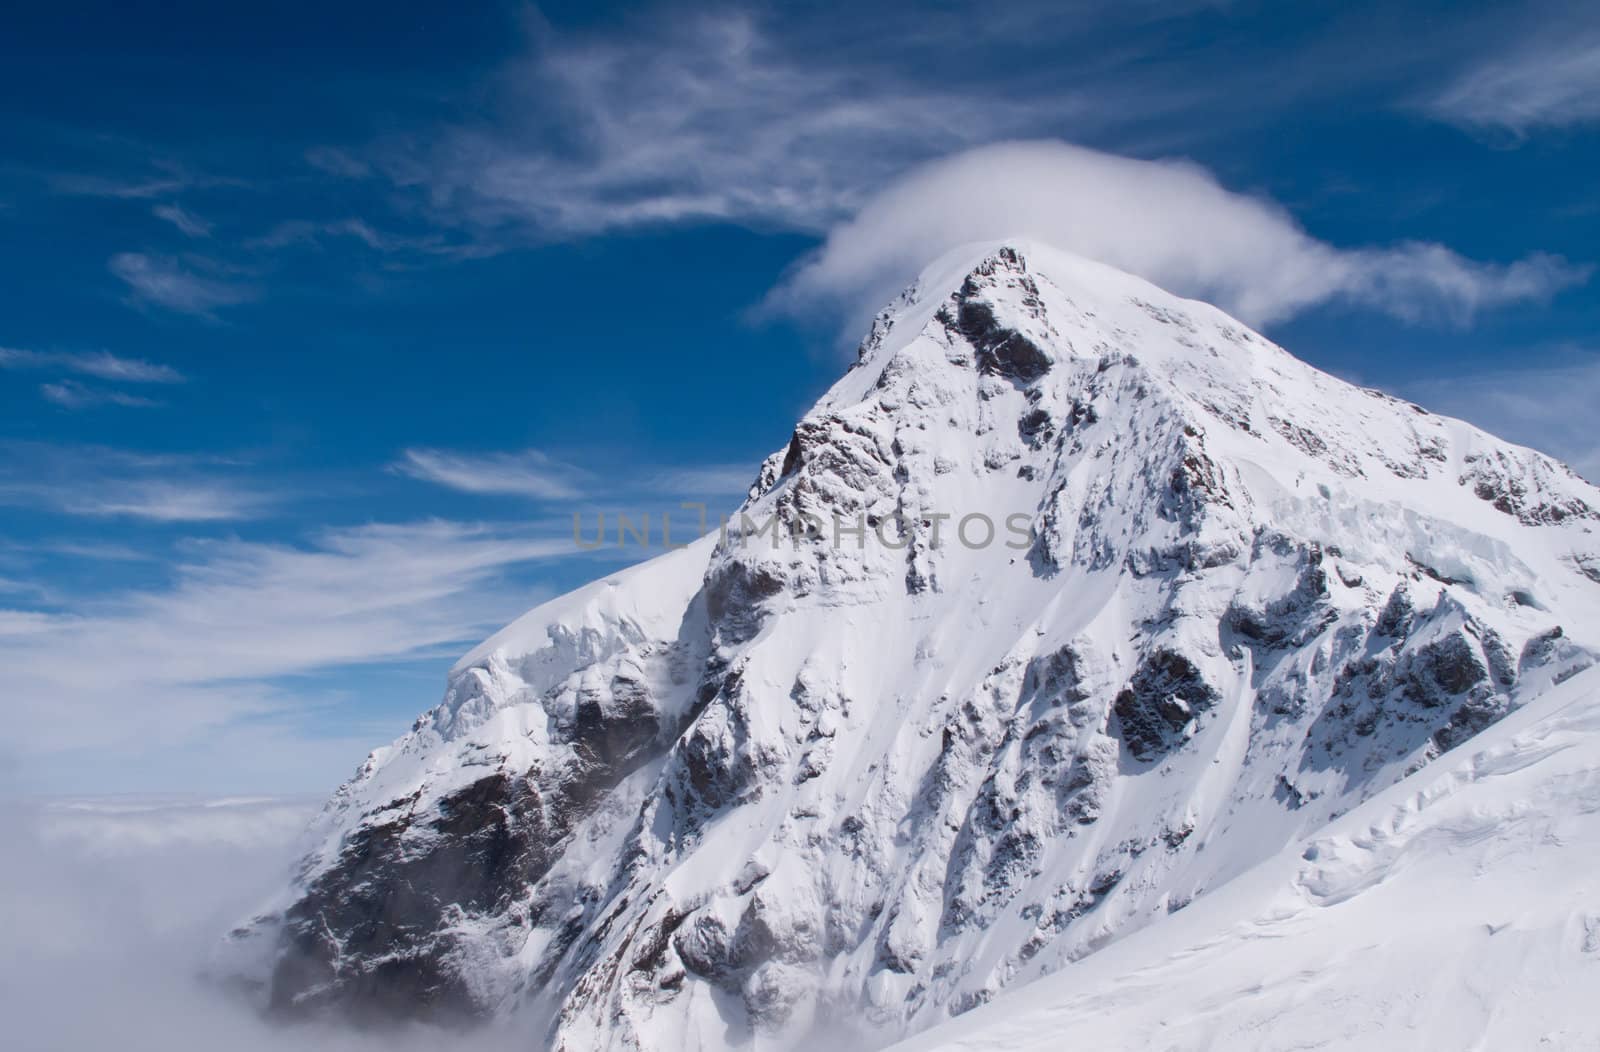 Mountain in Swiss Alps by steheap